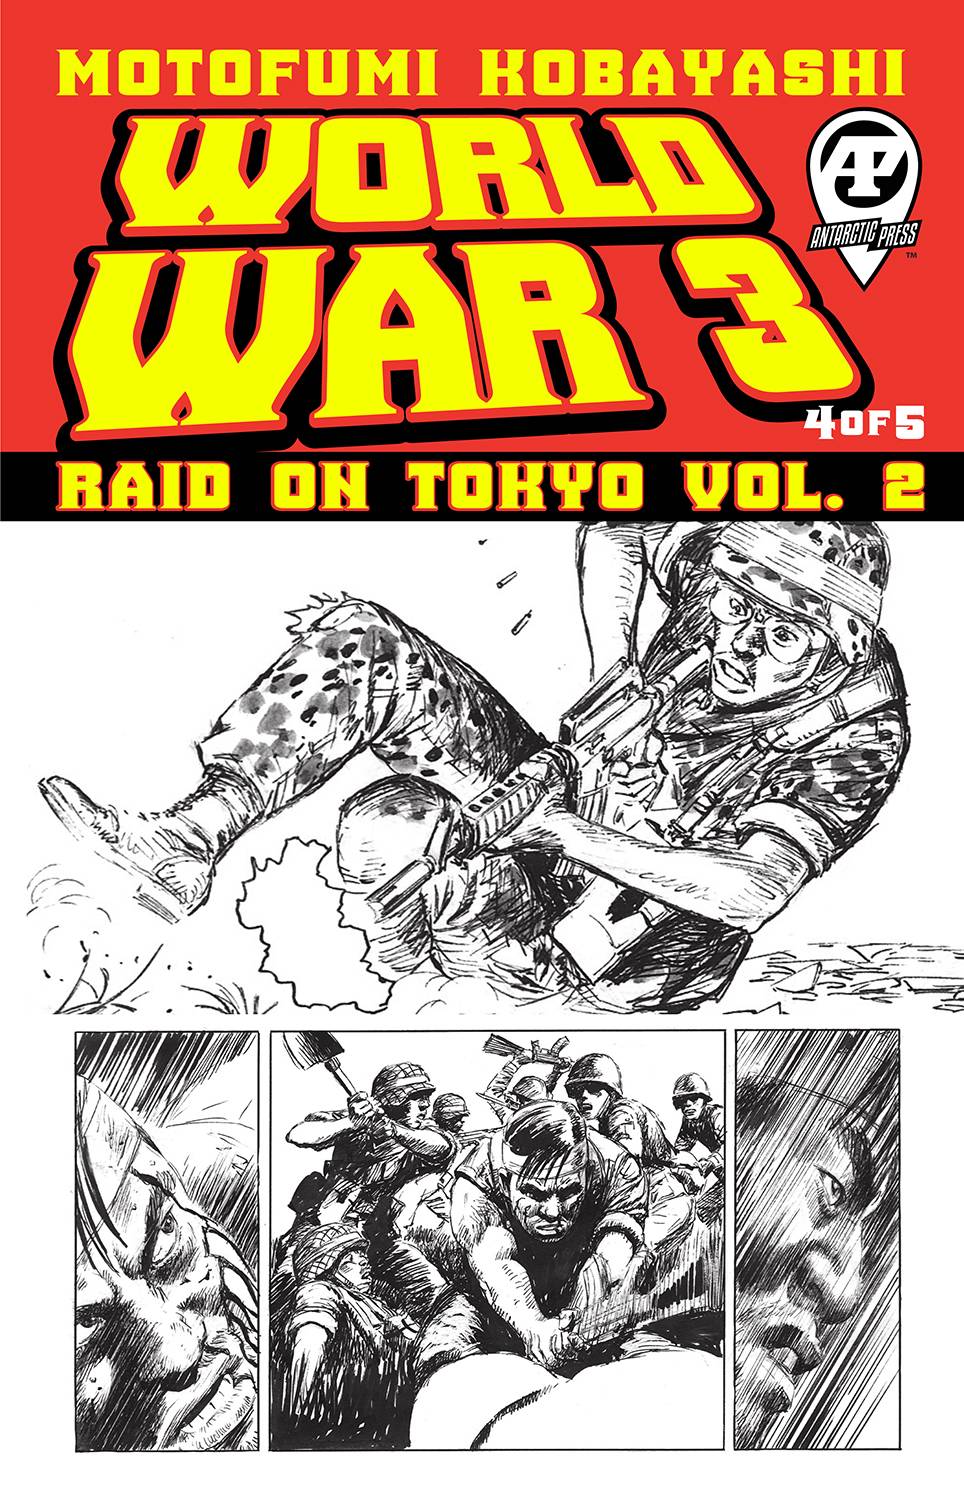 WORLD WAR 3 RAID ON TOKYO VOL 2 #4 (OF 5)